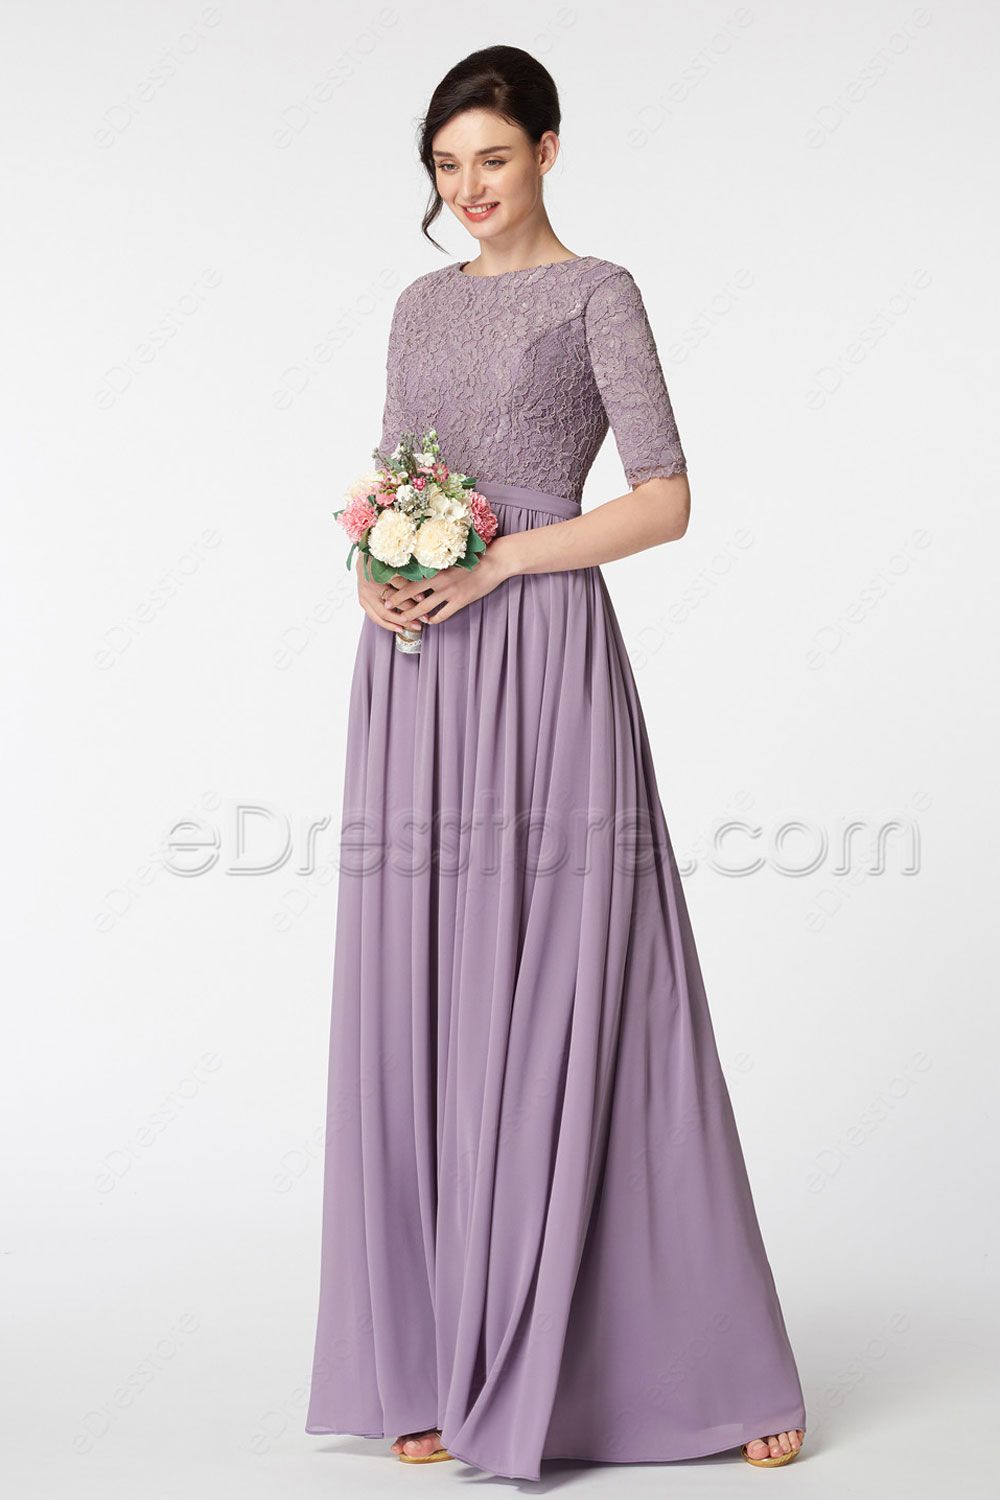 Wisteria Purple Modest Bridesmaid Dress with Elbow Sleeves | eDresstore